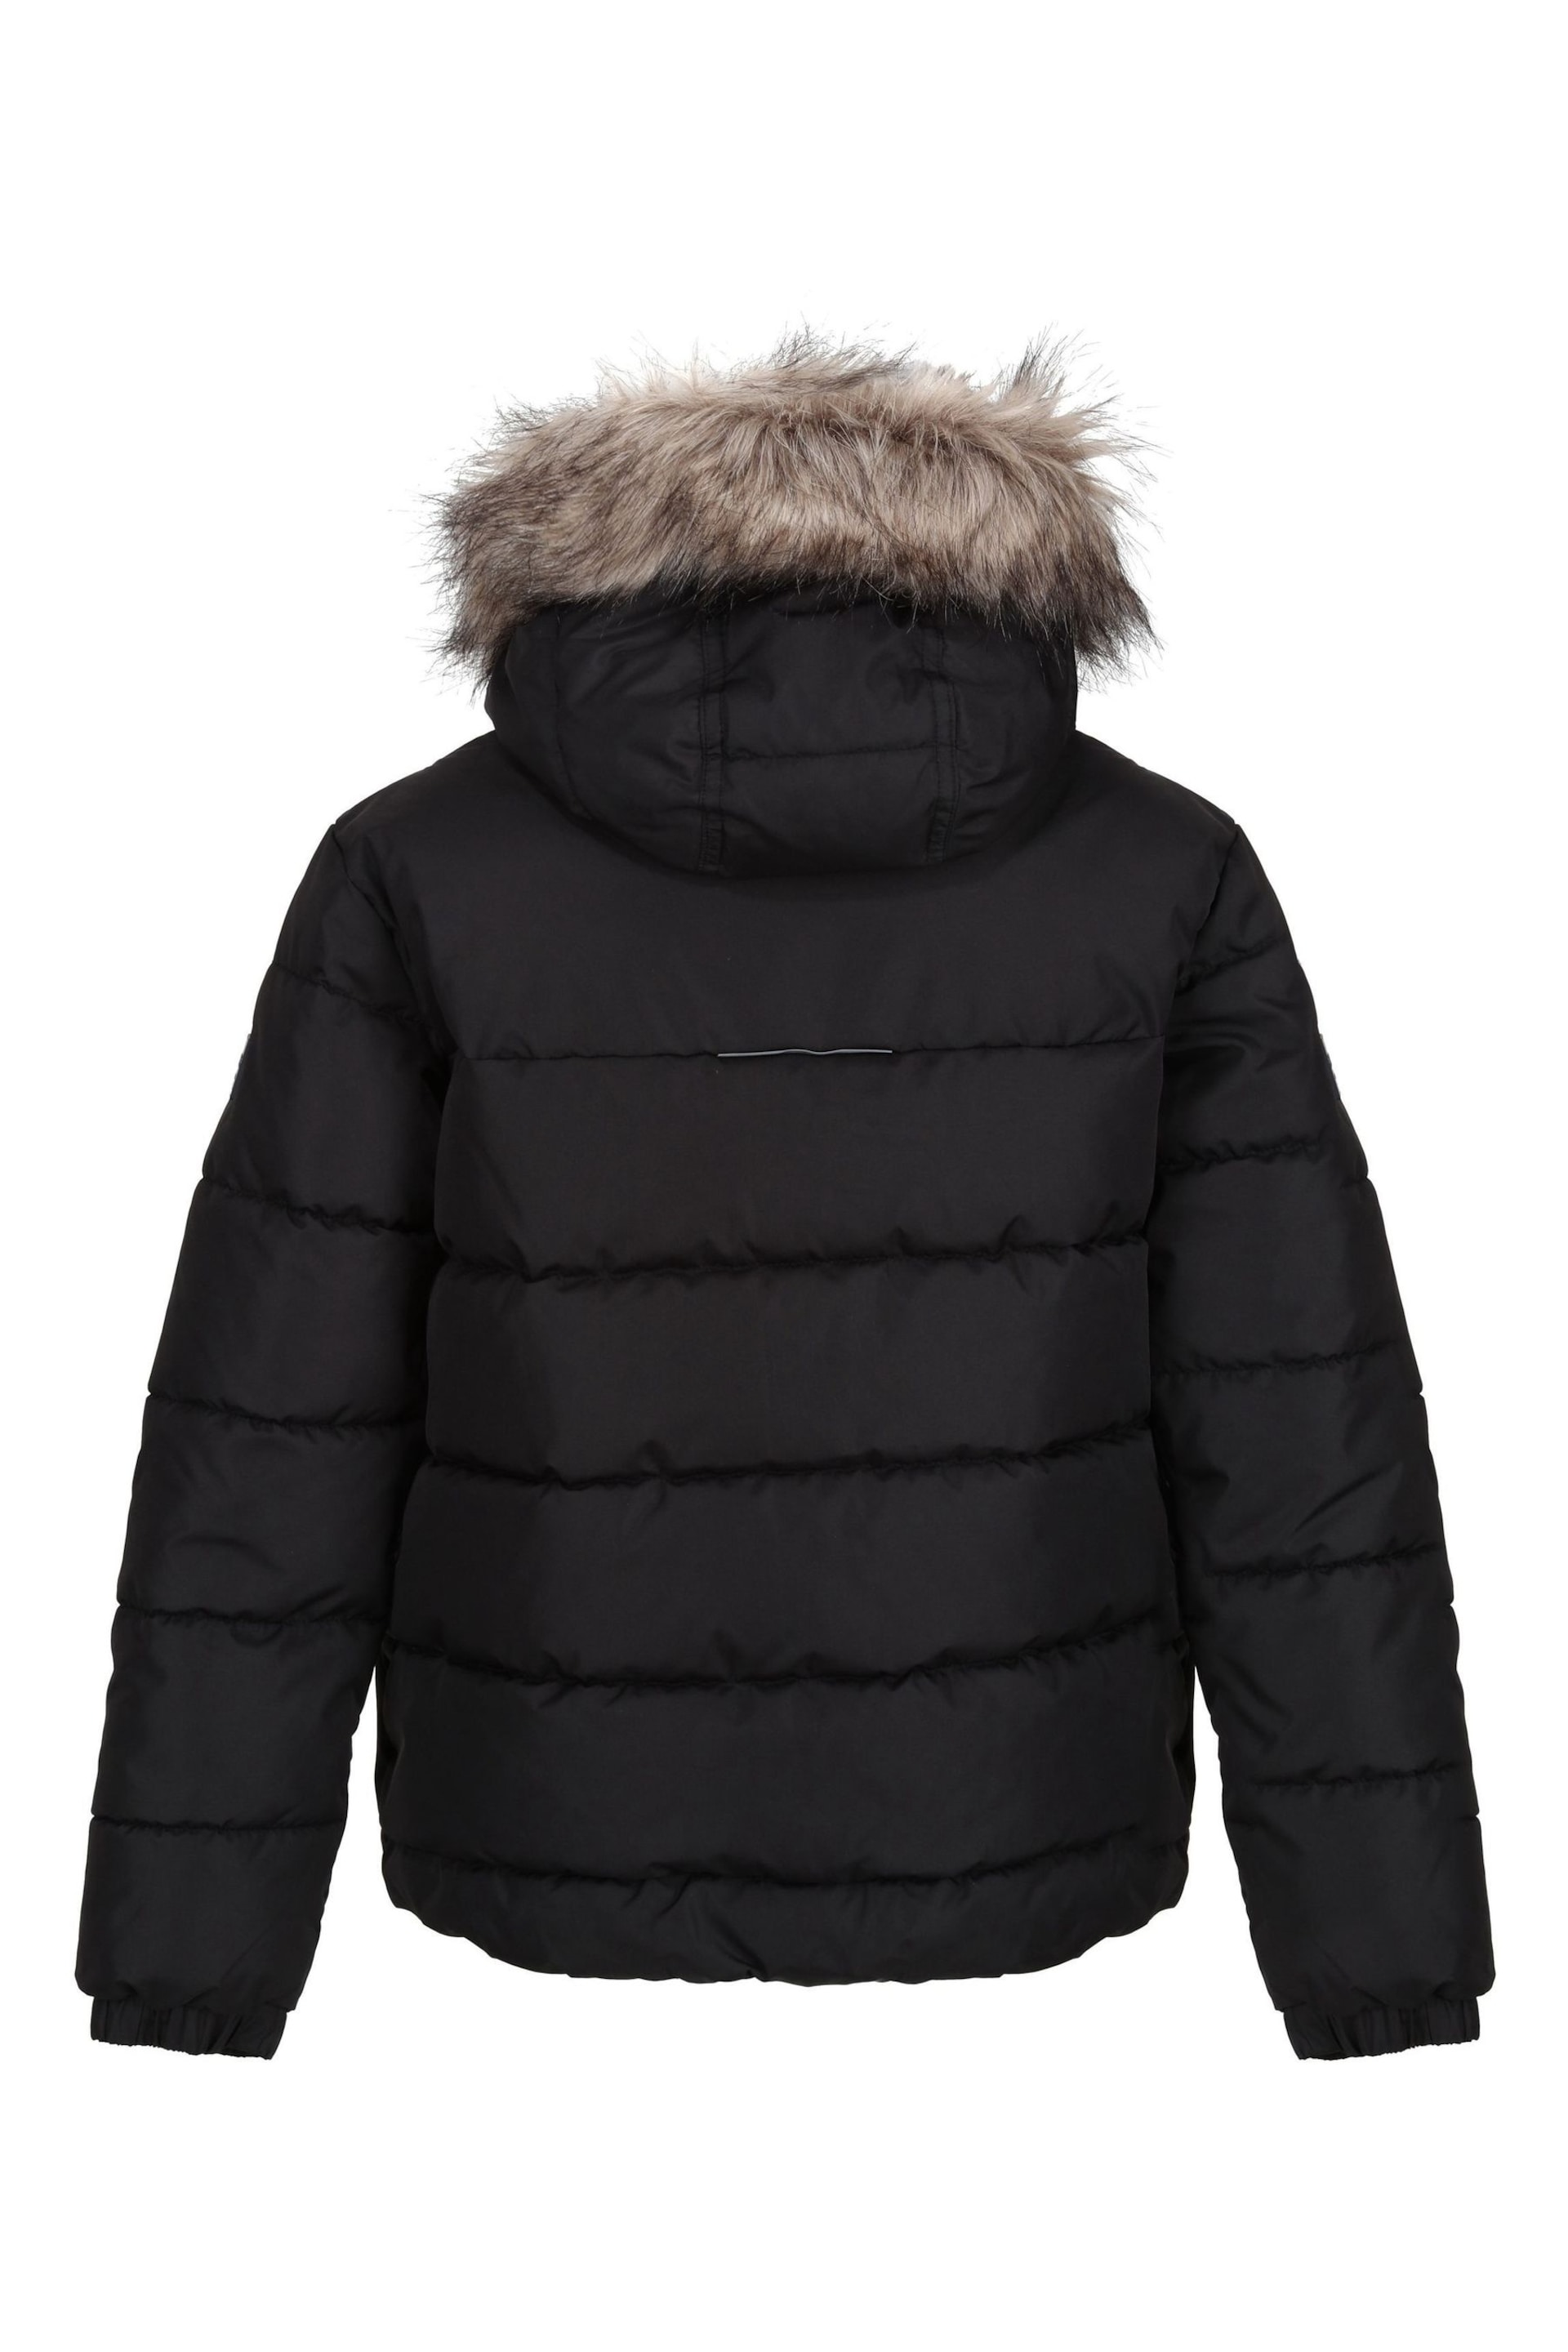 Regatta Black Parkes Faux Fur Lined Hood Jacket - Image 5 of 7